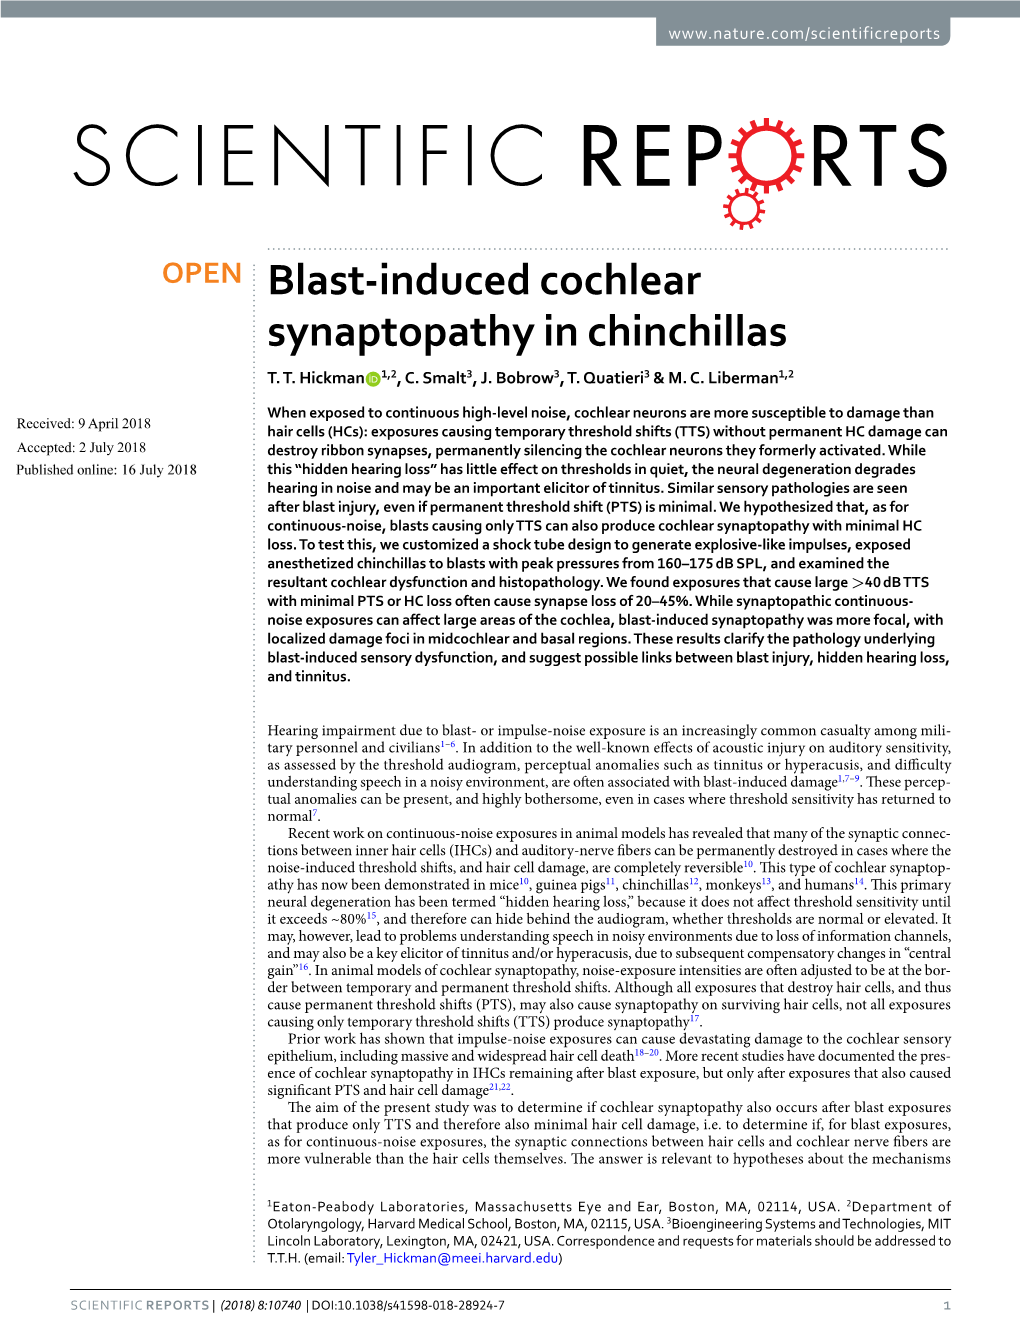 Blast-Induced Cochlear Synaptopathy in Chinchillas T